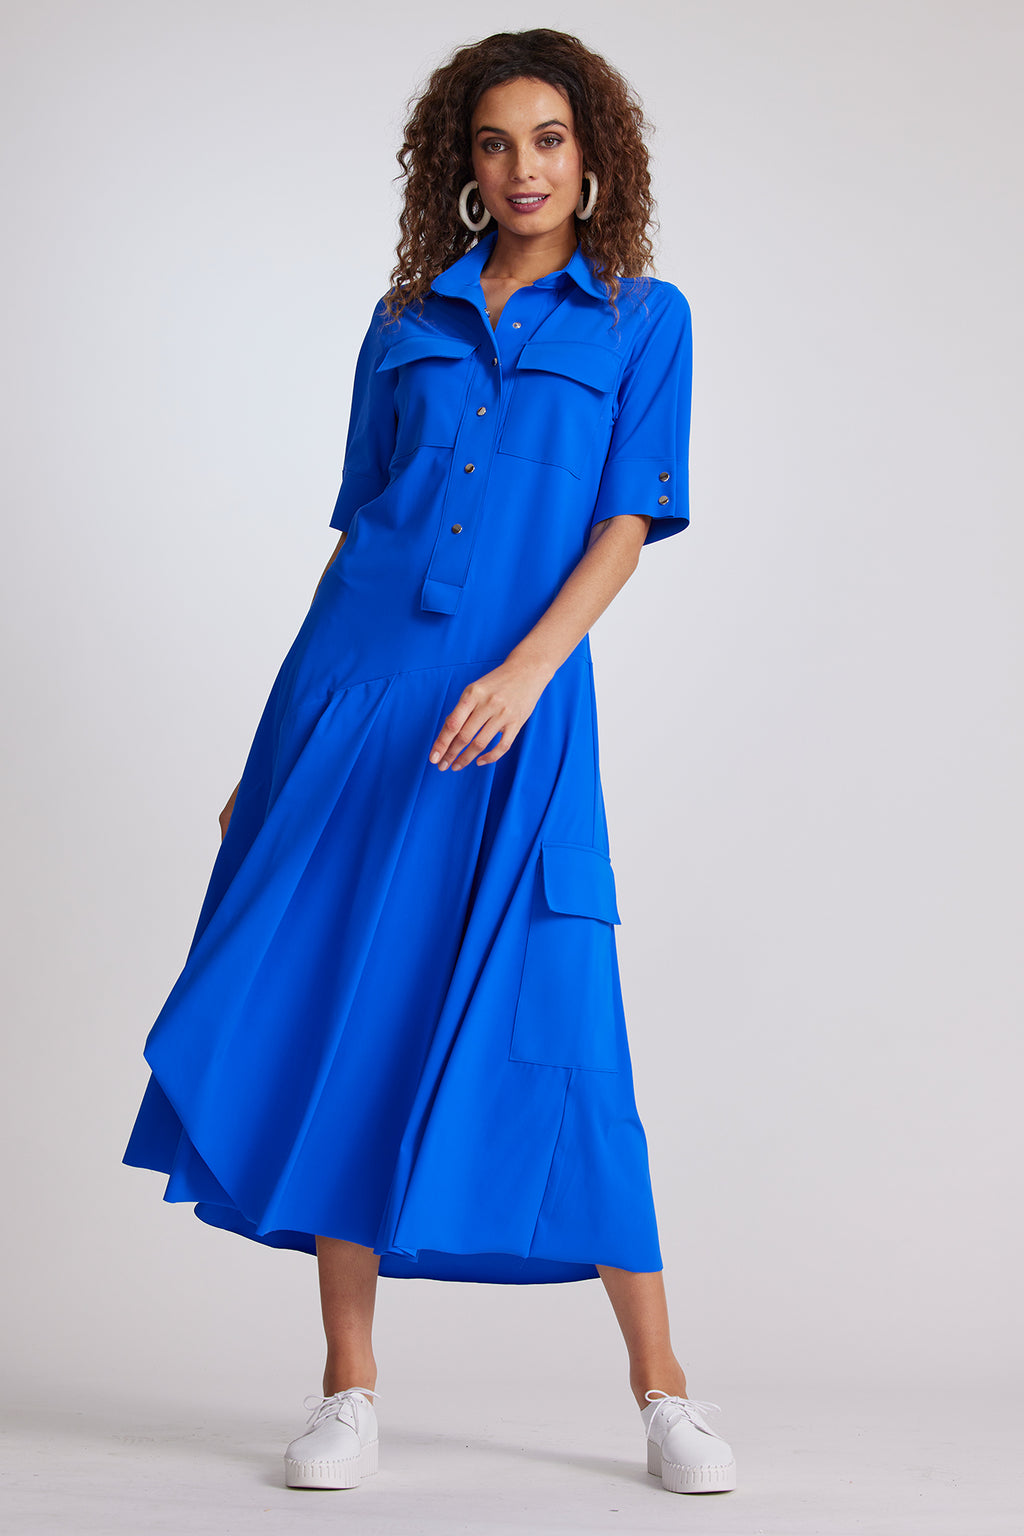 PAULA RYAN Pocketed Shirtdress - Greek Blue - Microjersey - Paula Ryan